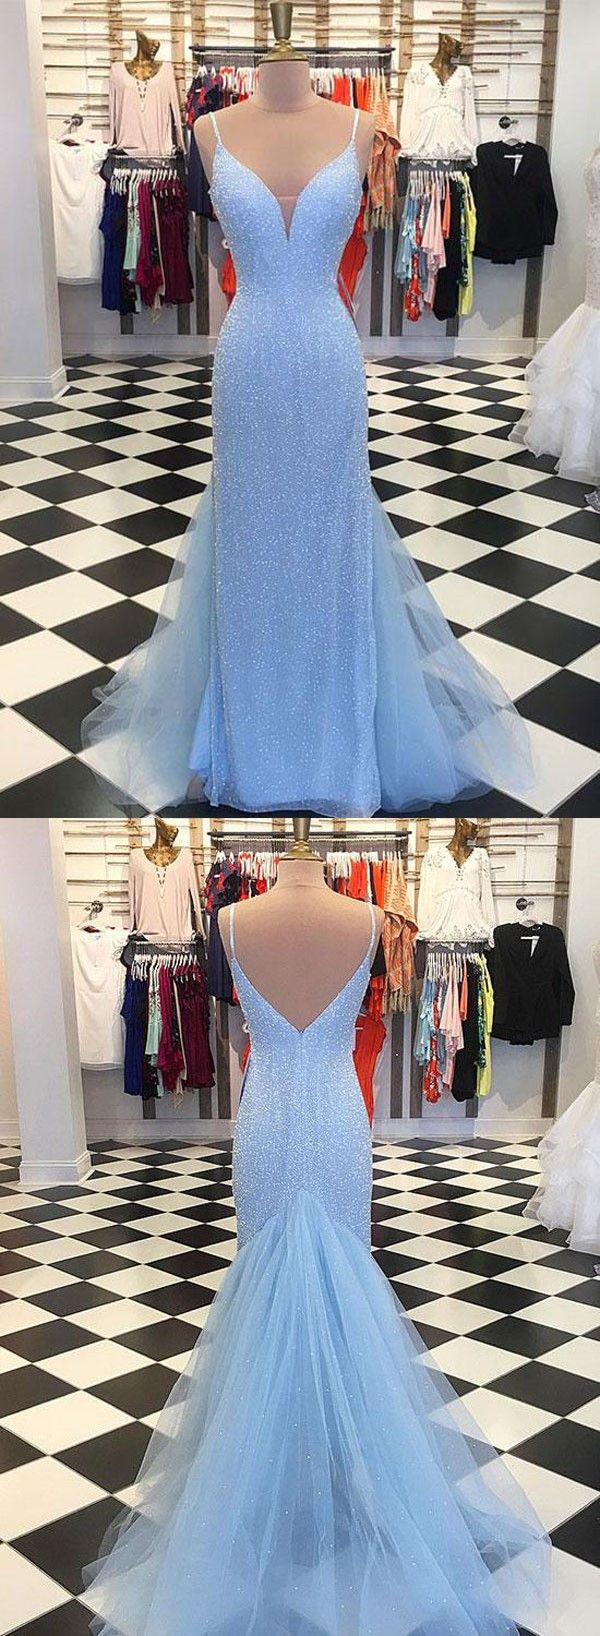 Wedding - Mermaid Spaghetti Straps Sweep Train Blue Sequined Backless Prom Dress